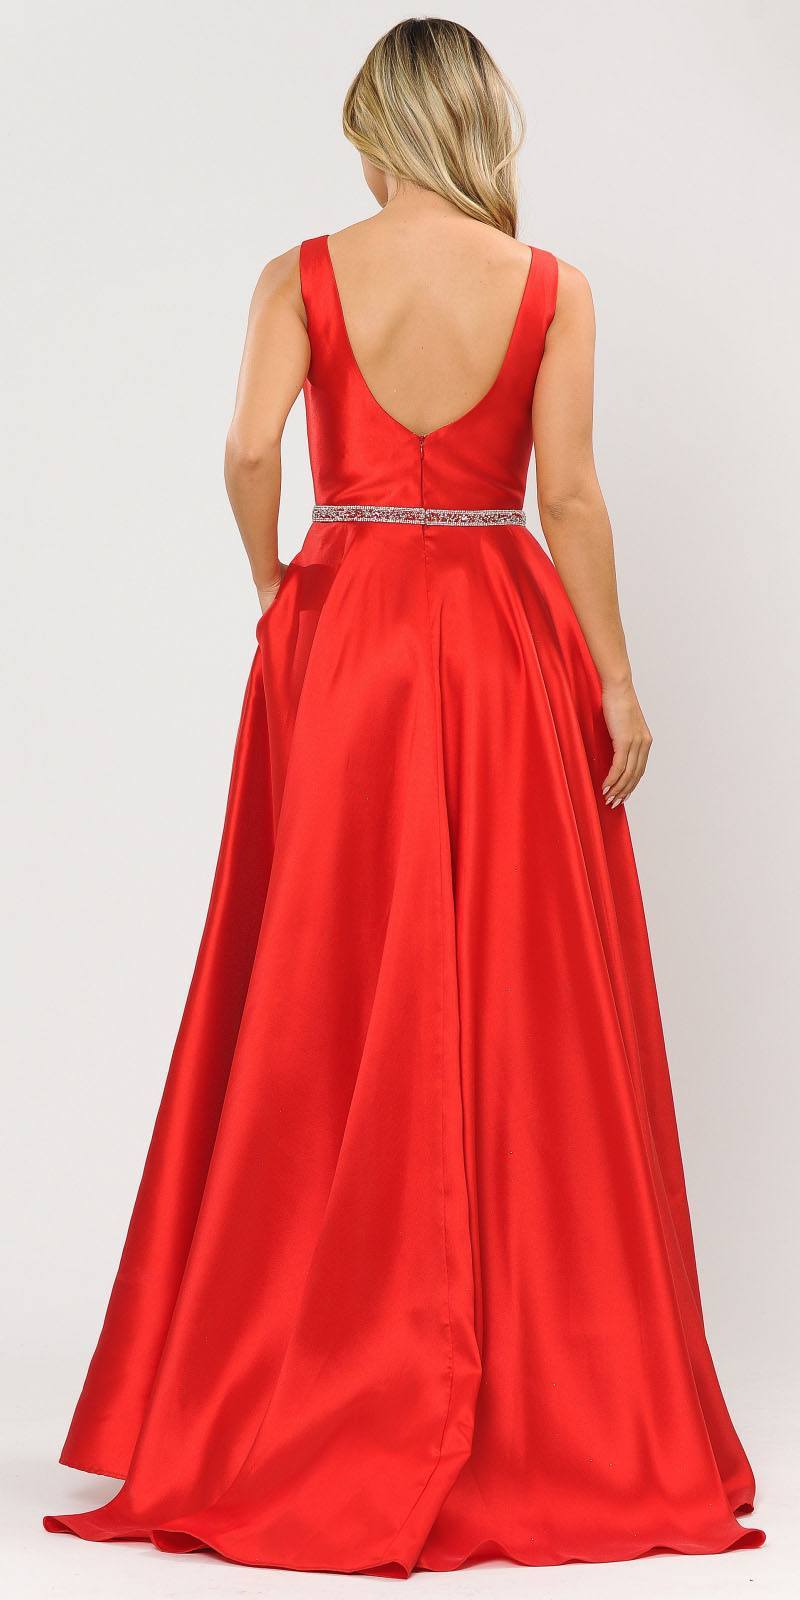 Poly USA 8678 Red Sleeveless Long Prom Dress Embellished Waist